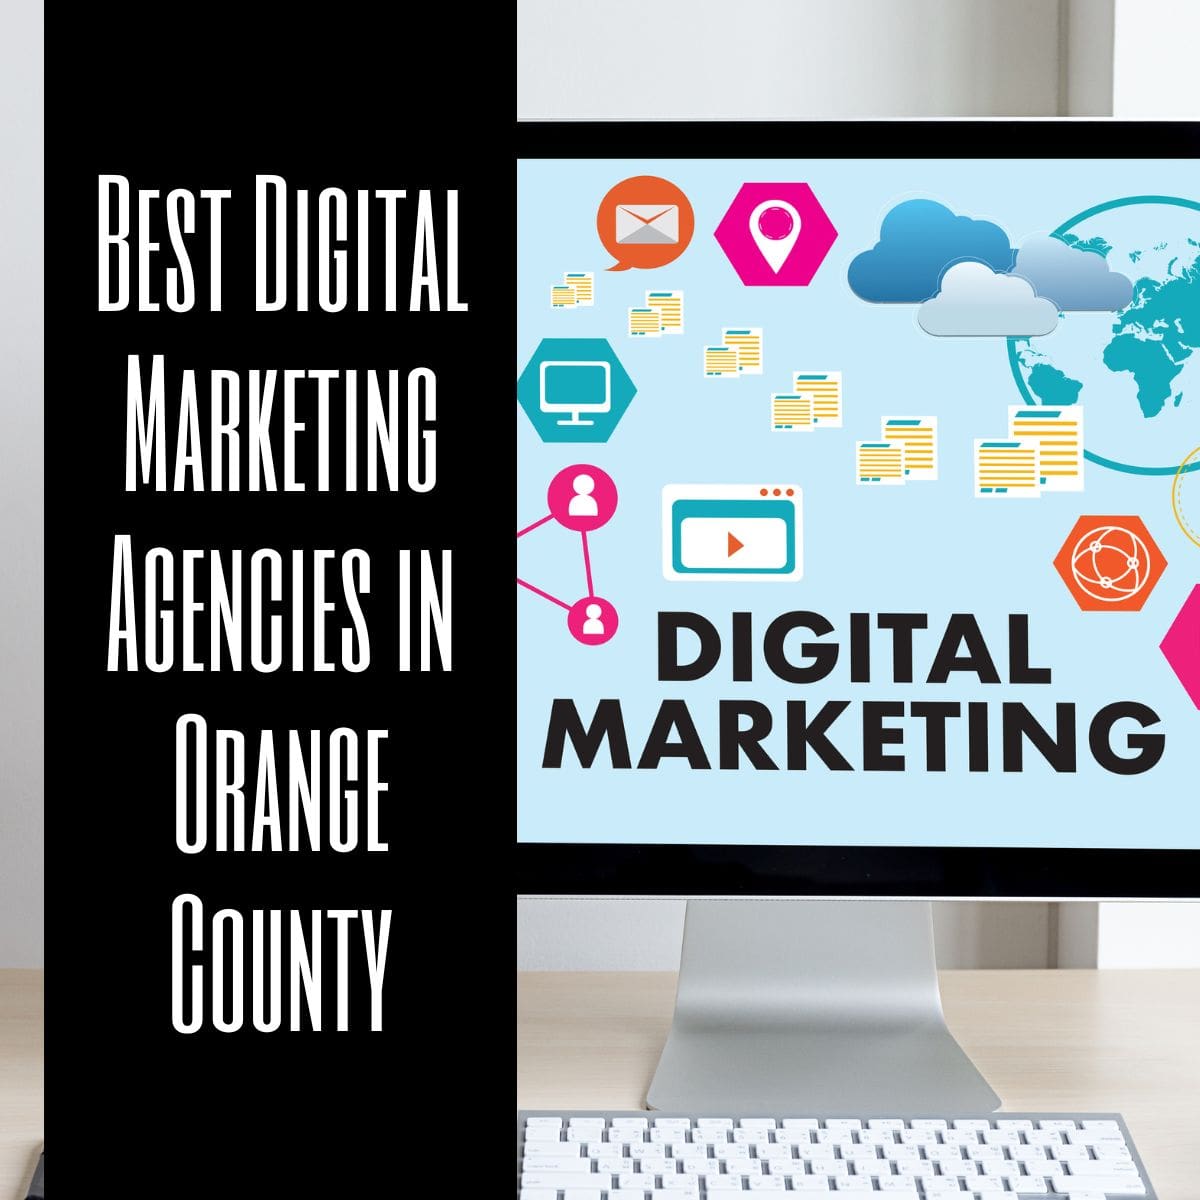 Best Digital Marketing Agencies In Orange County